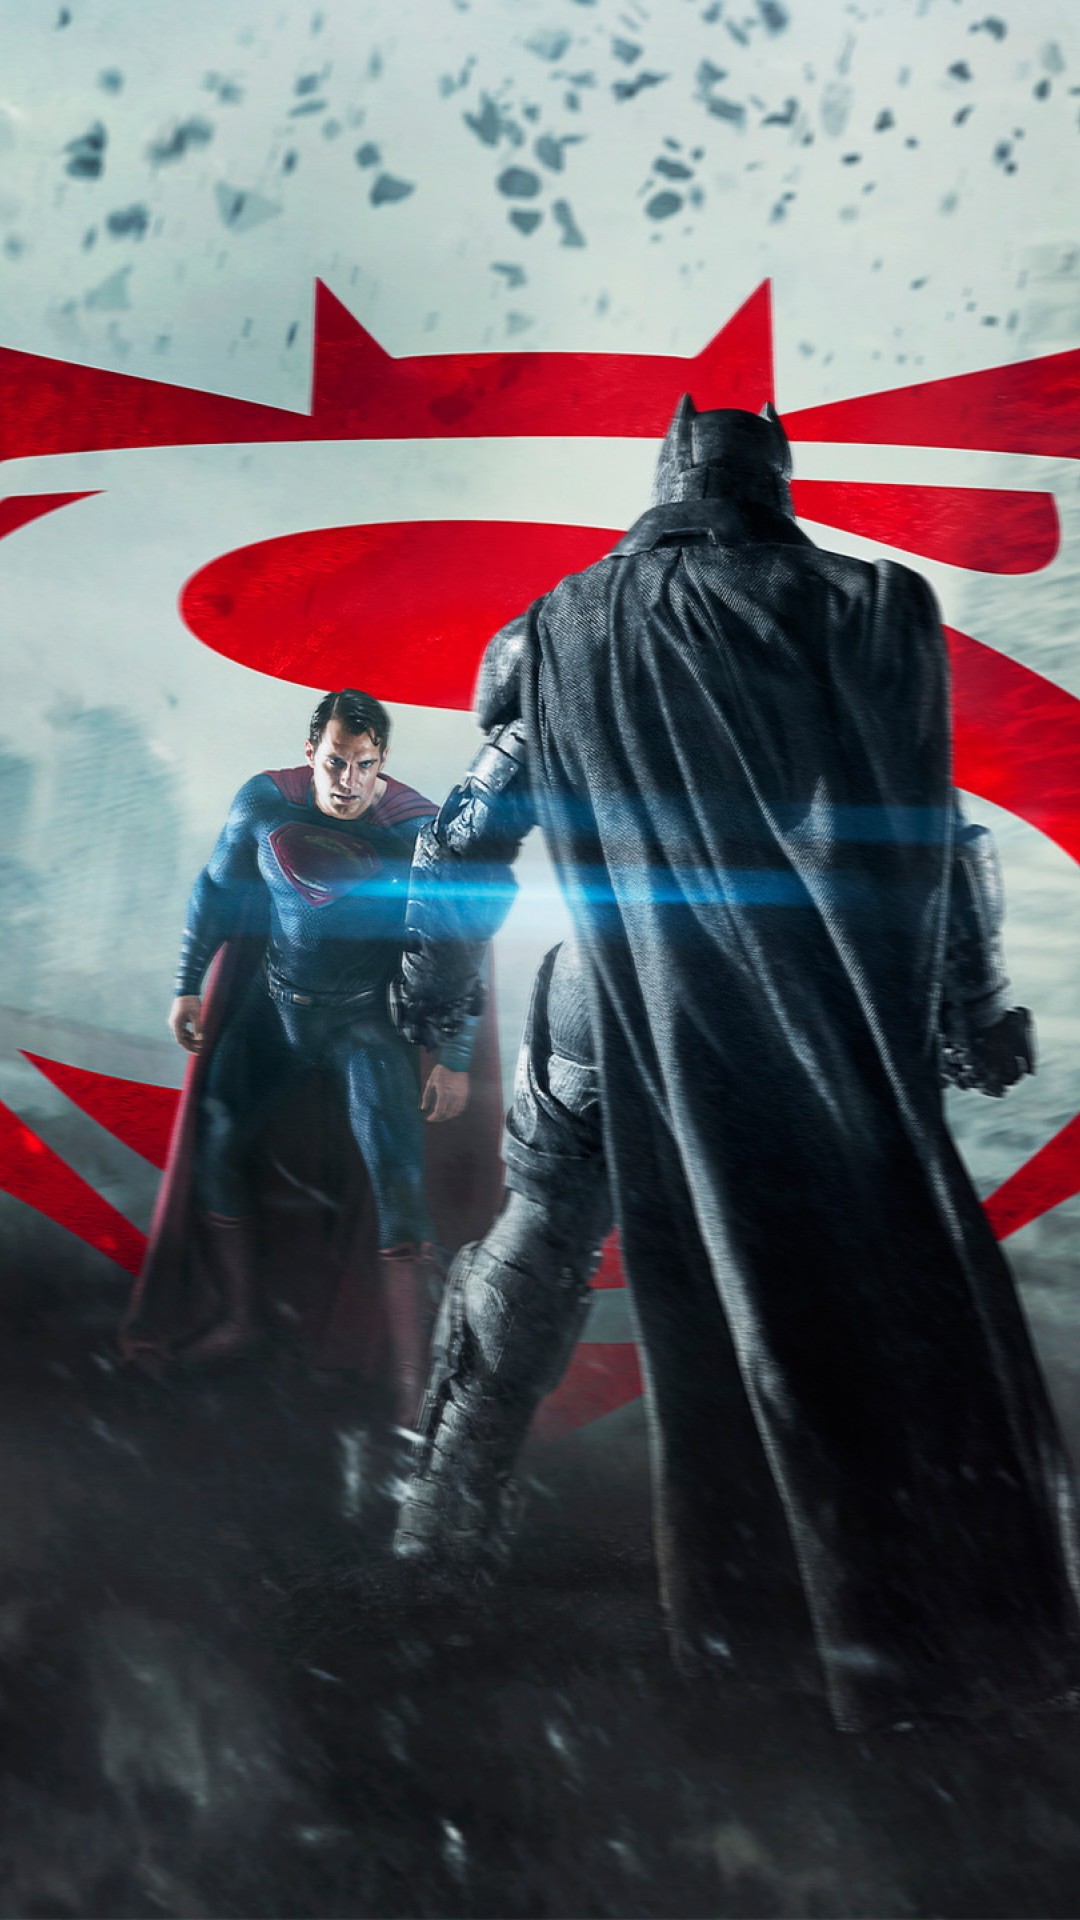 1080x1920 Batman v Superman Dawn of Justice Wallpaper for Desktop and Mobiles - iPhone  6 / 6S Plus